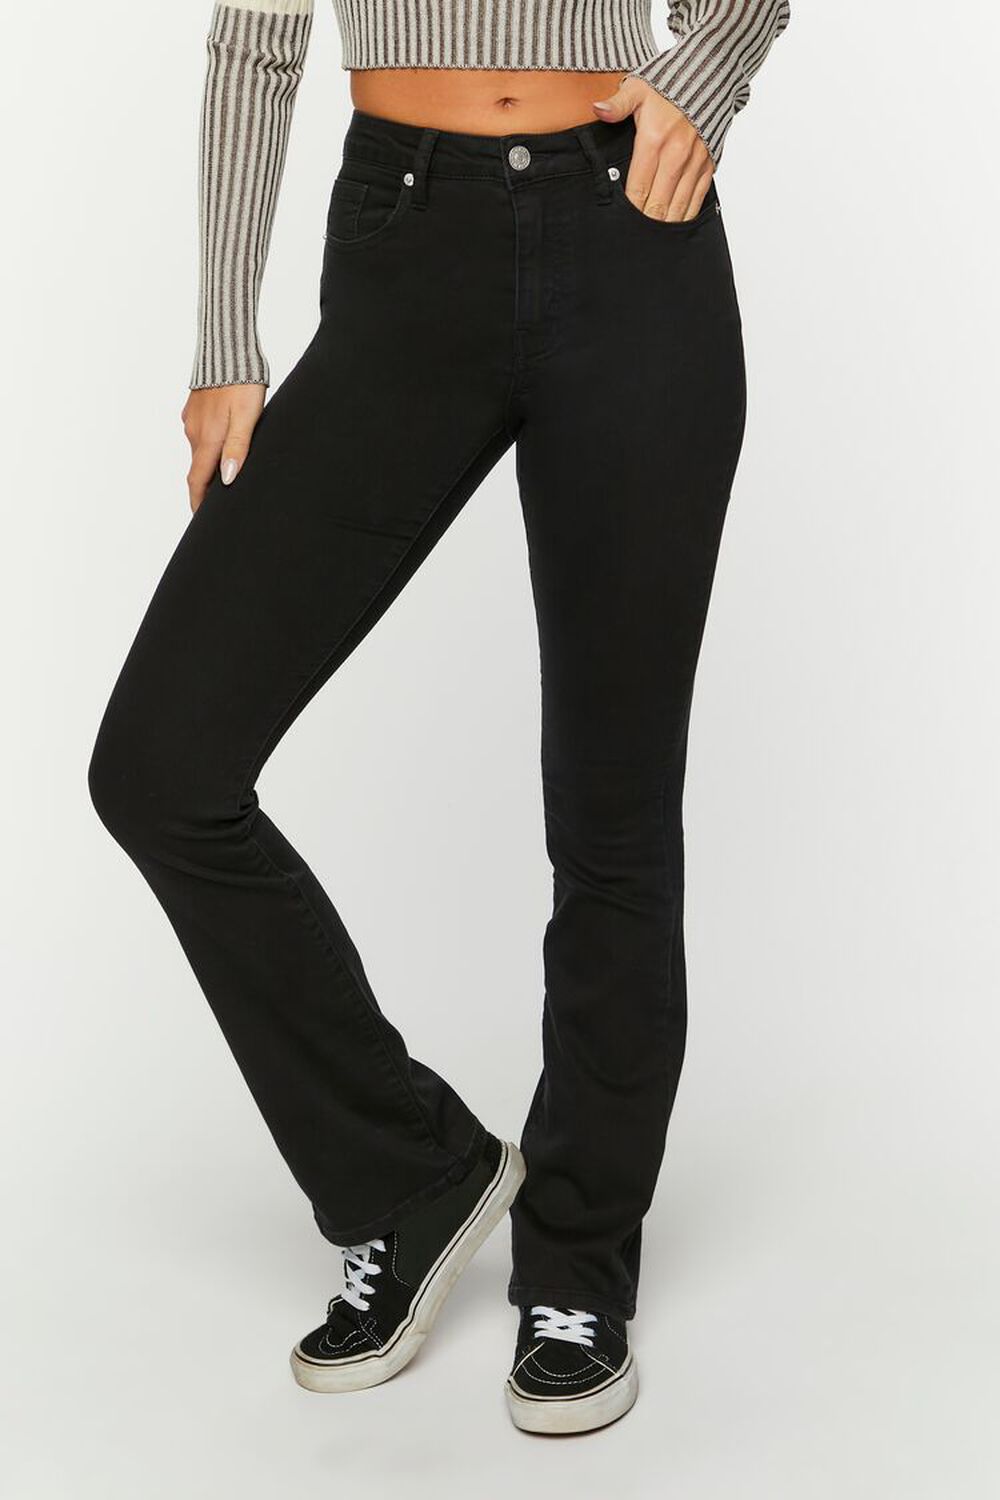 BLACK Super Stretch Straight-Leg Jeans, image 2